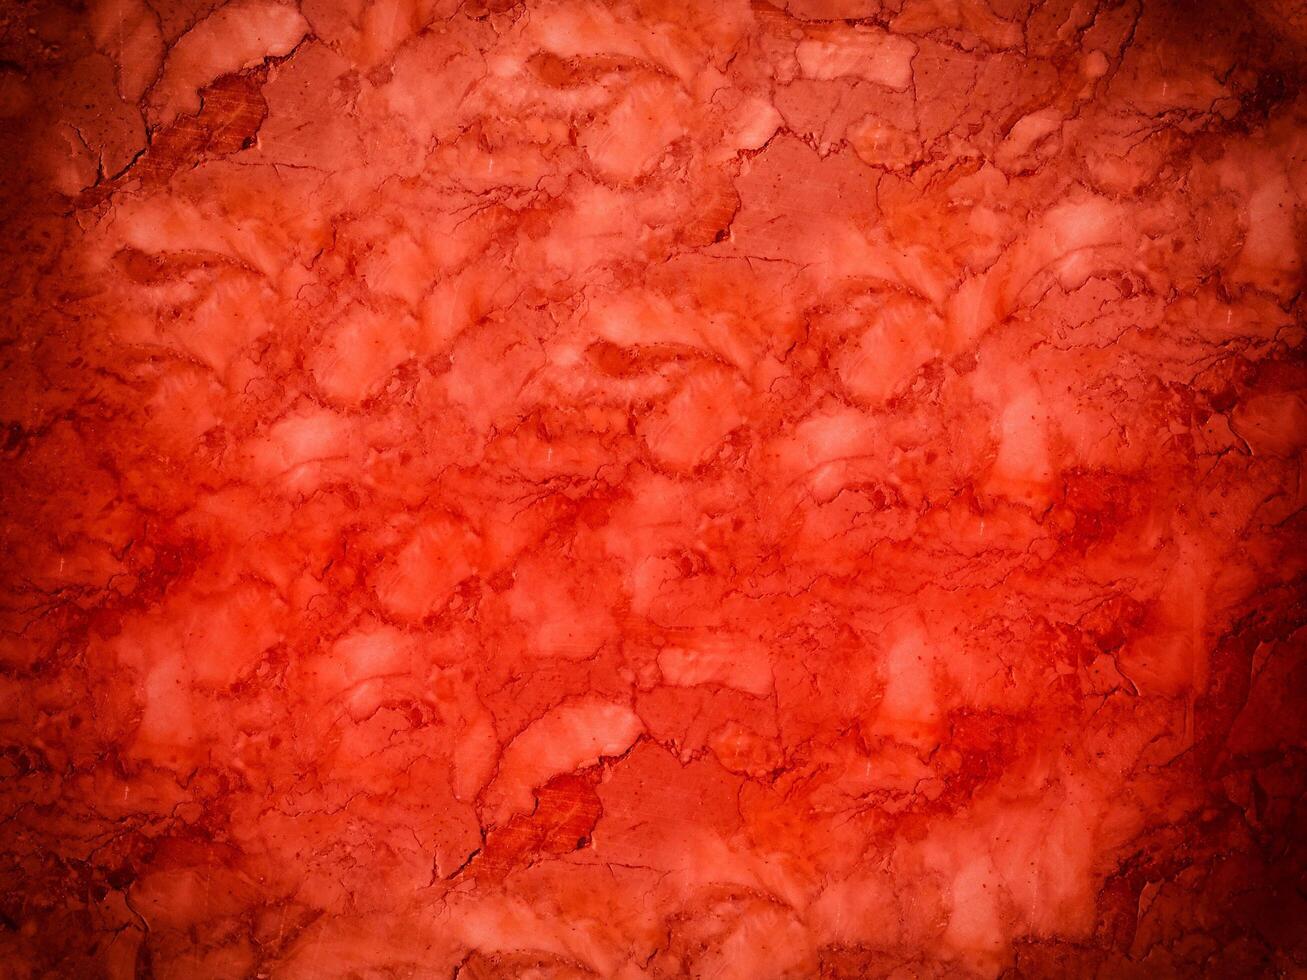 rote Marmorstruktur foto